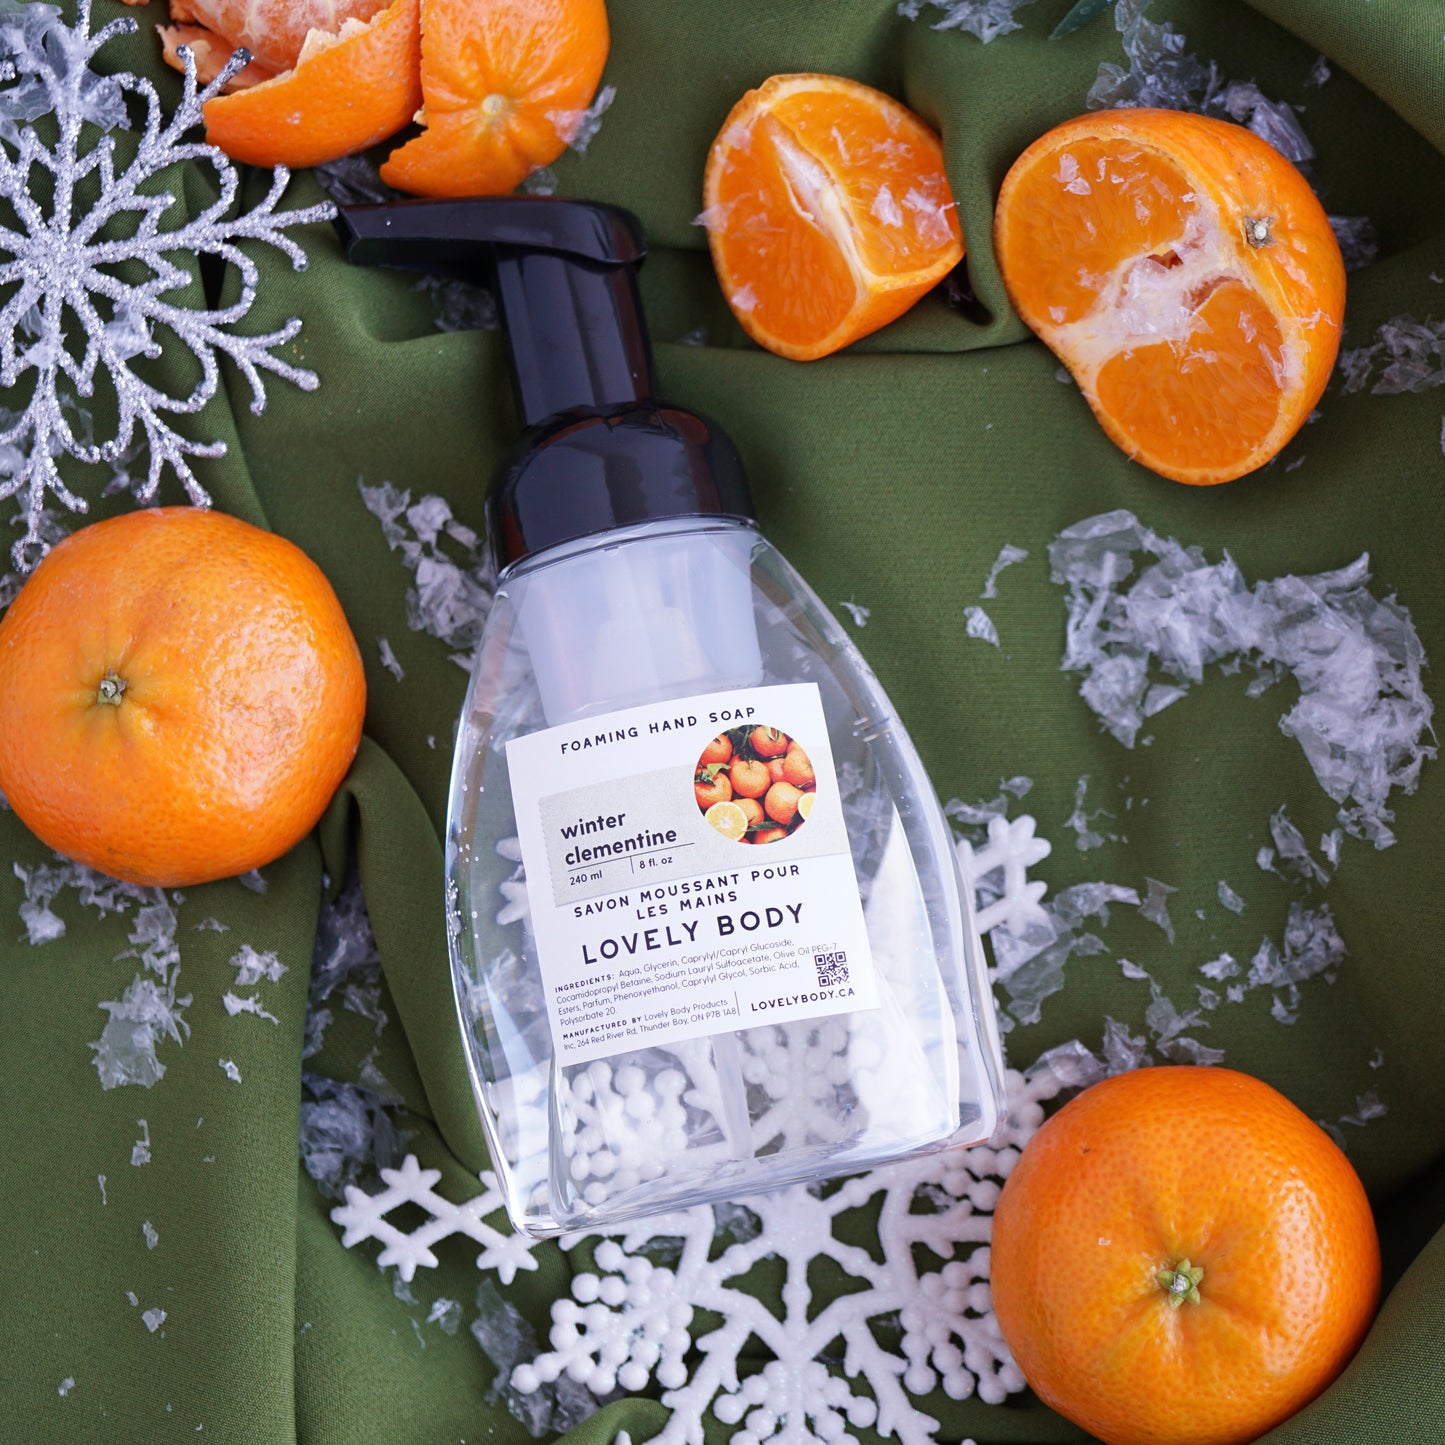 Winter Clementine Foaming Hand Soap & Refills